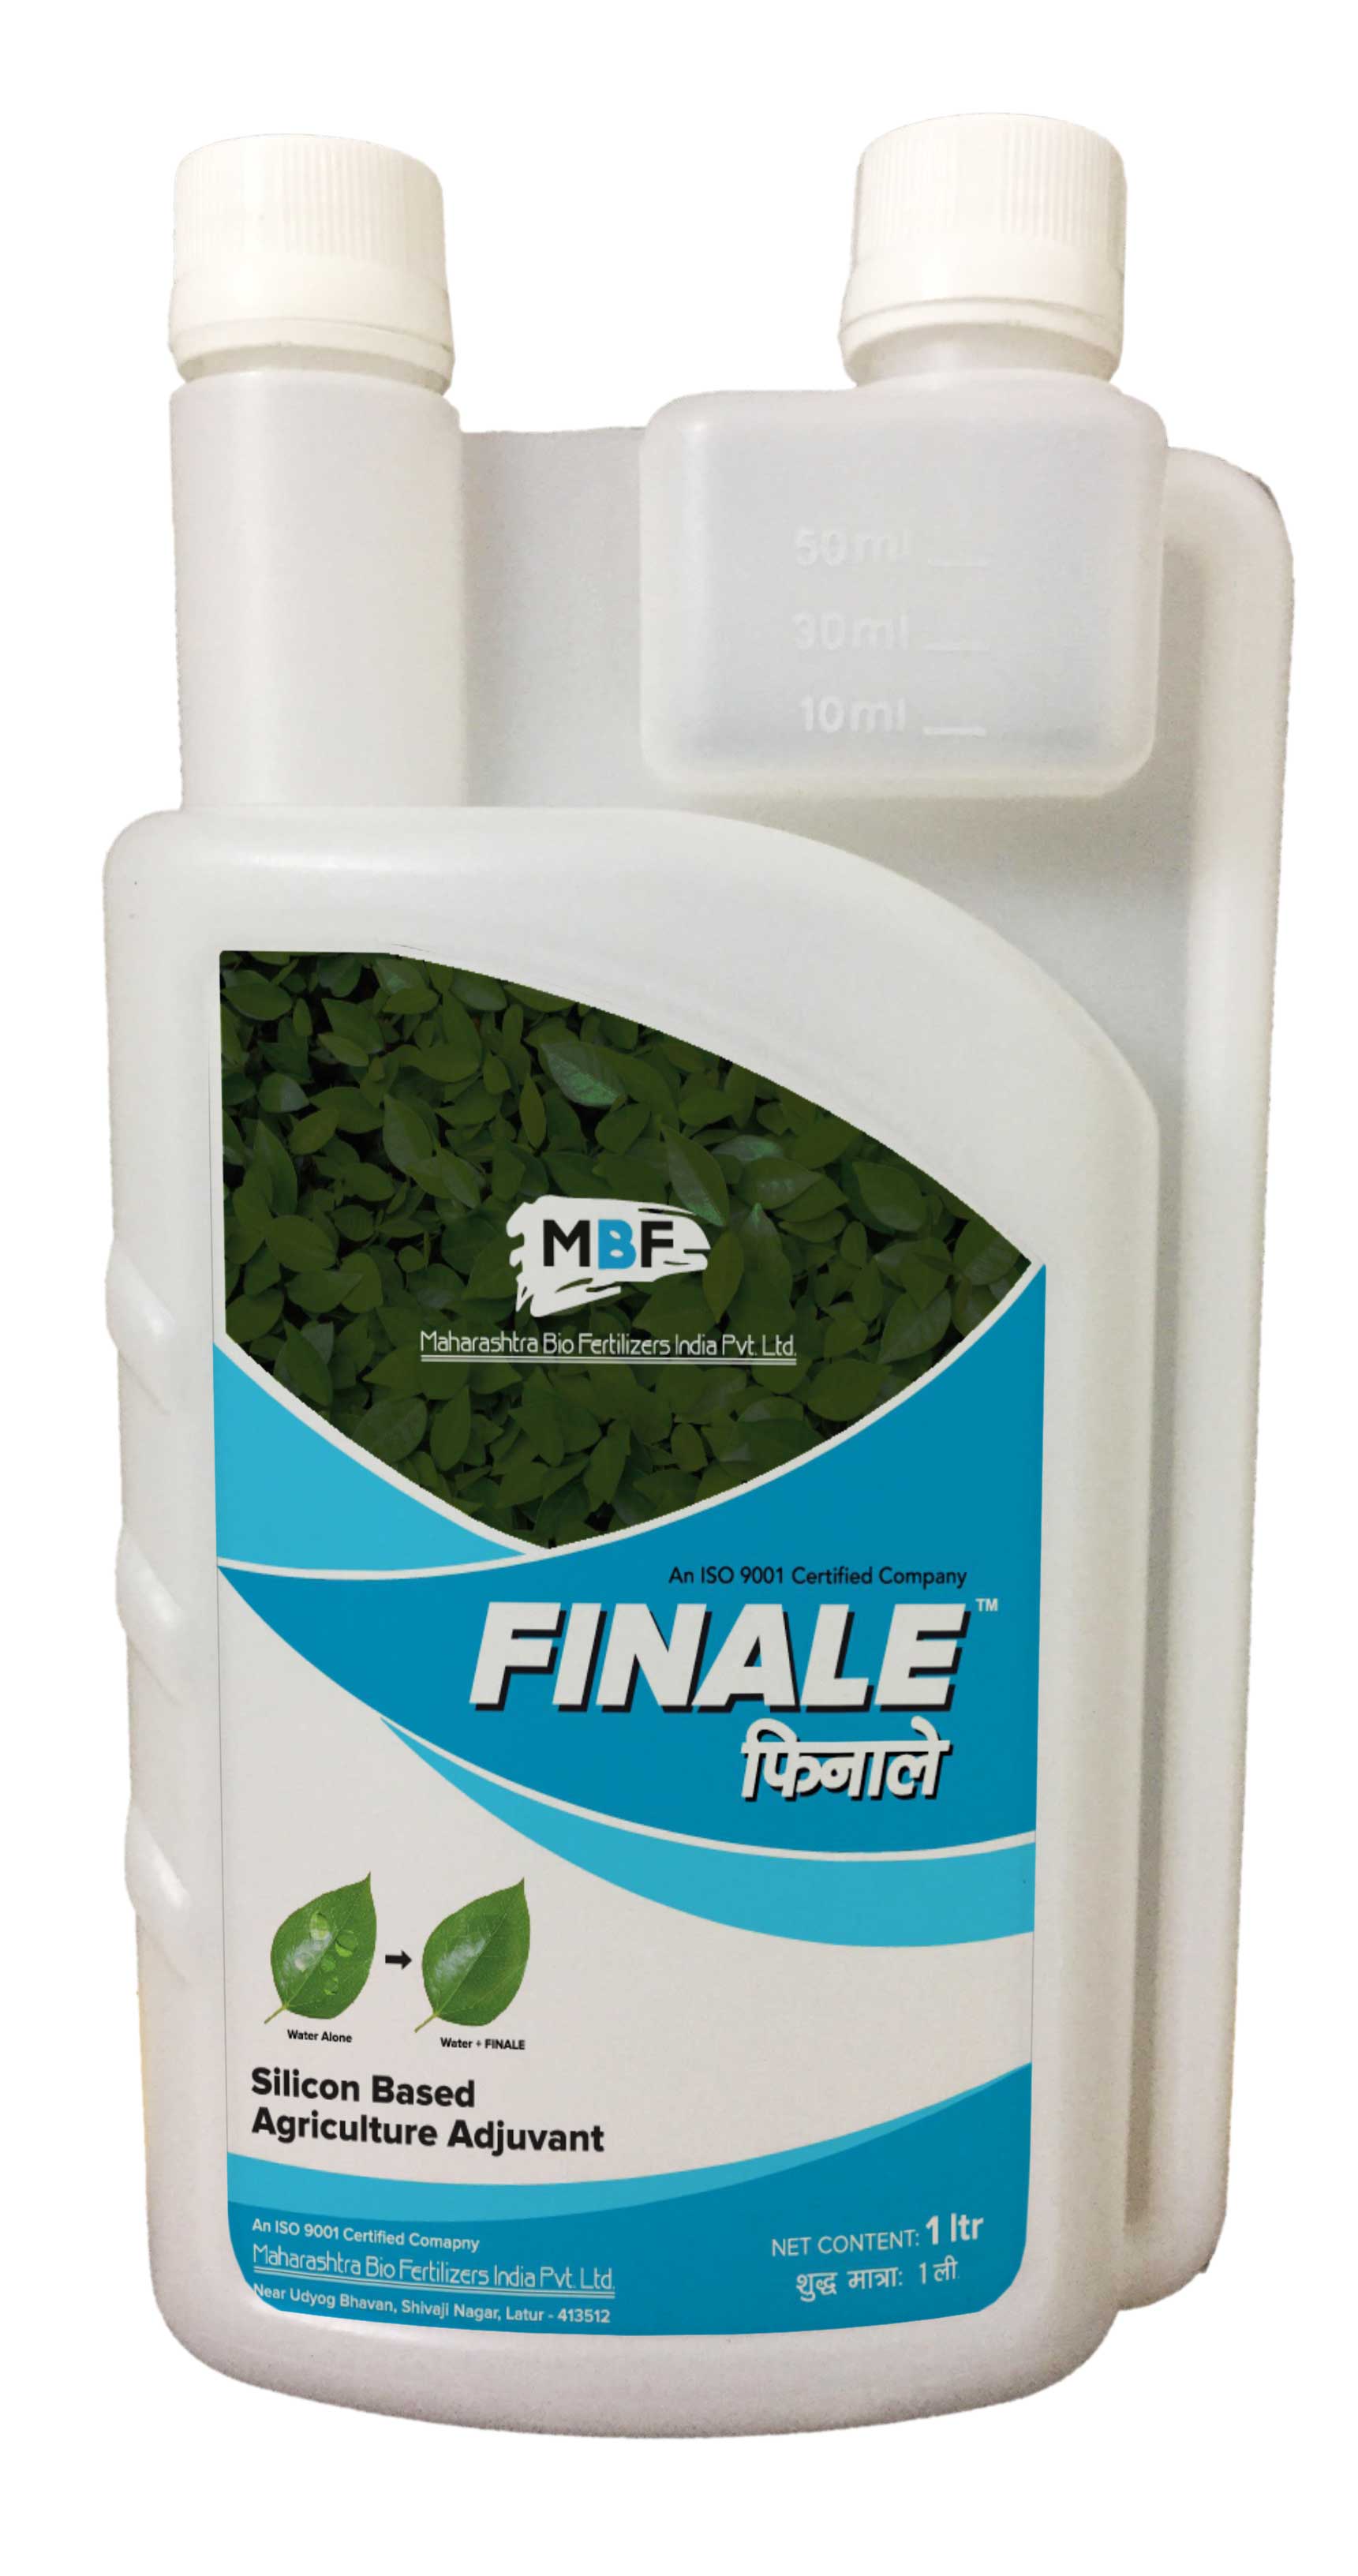 finale – MBF- Maharashtra Bio Fertilizers